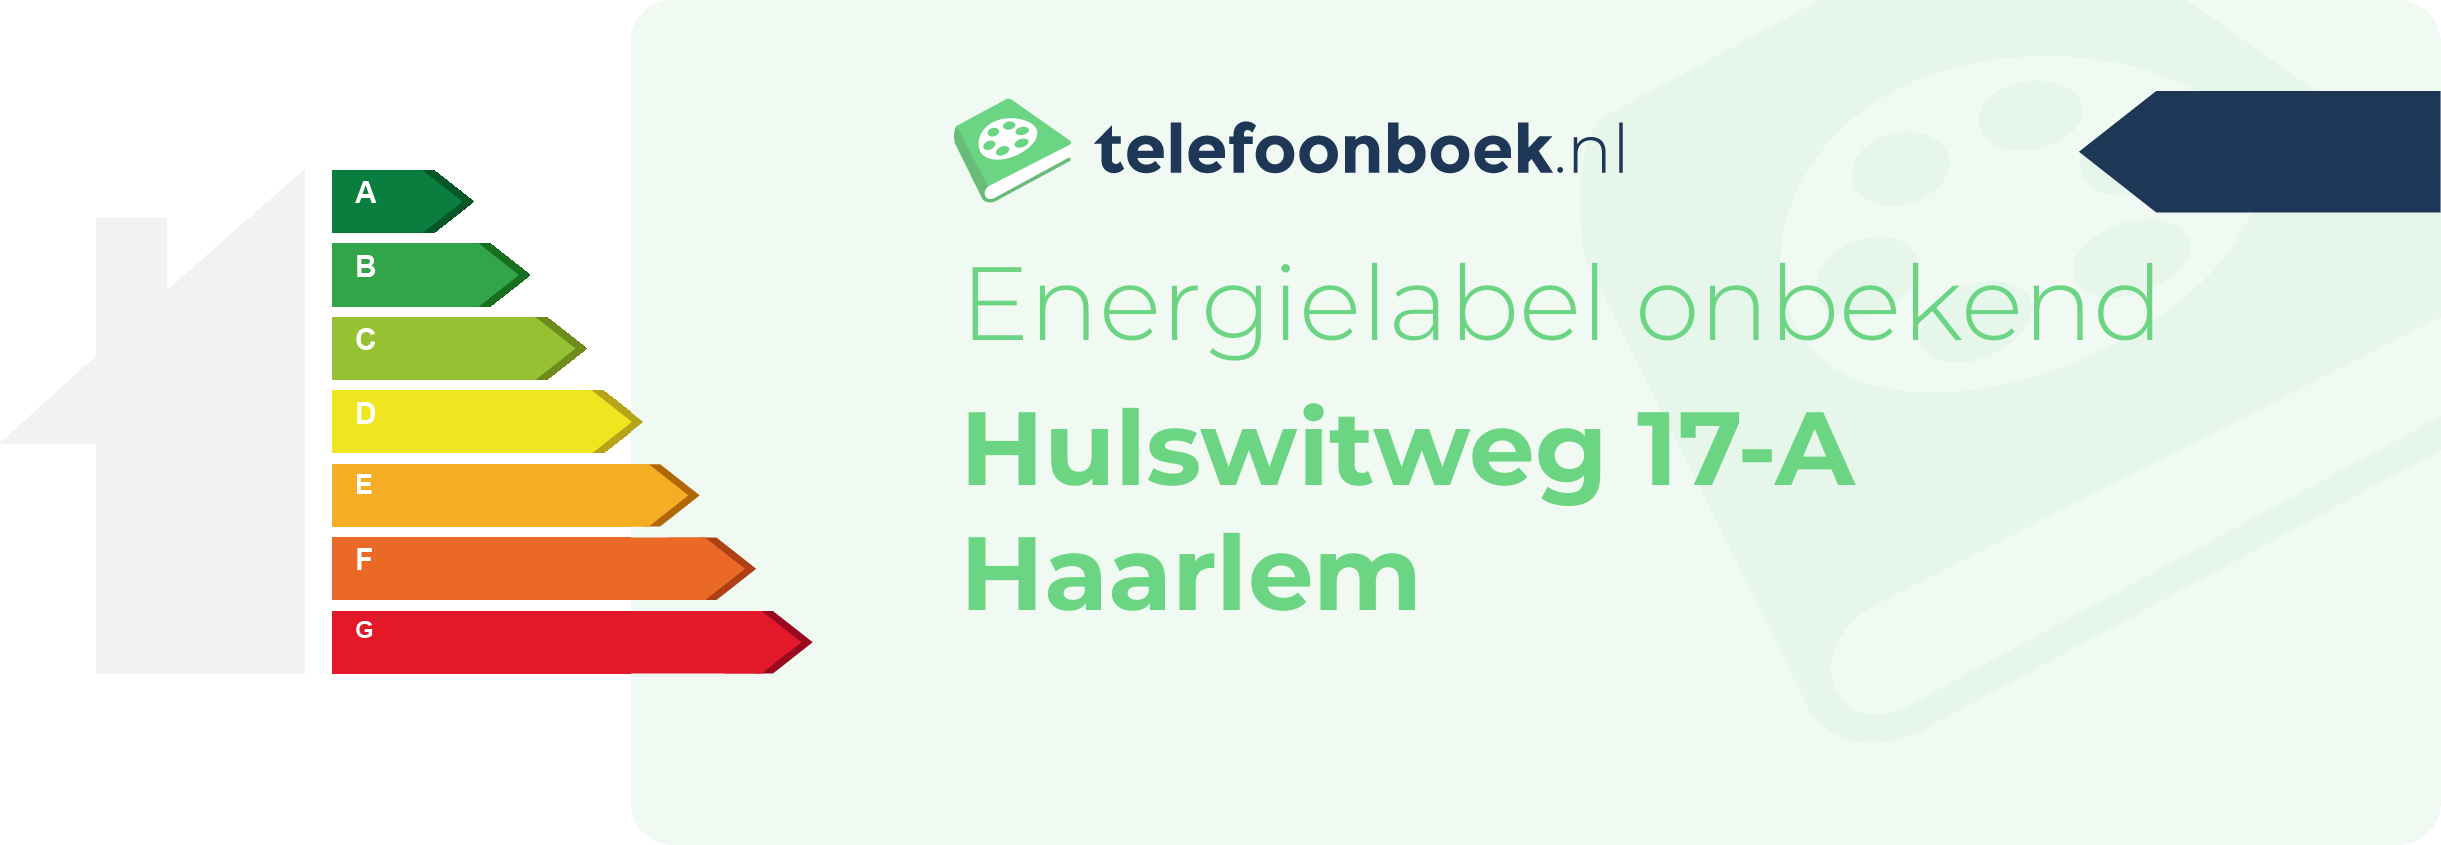 Energielabel Hulswitweg 17-A Haarlem